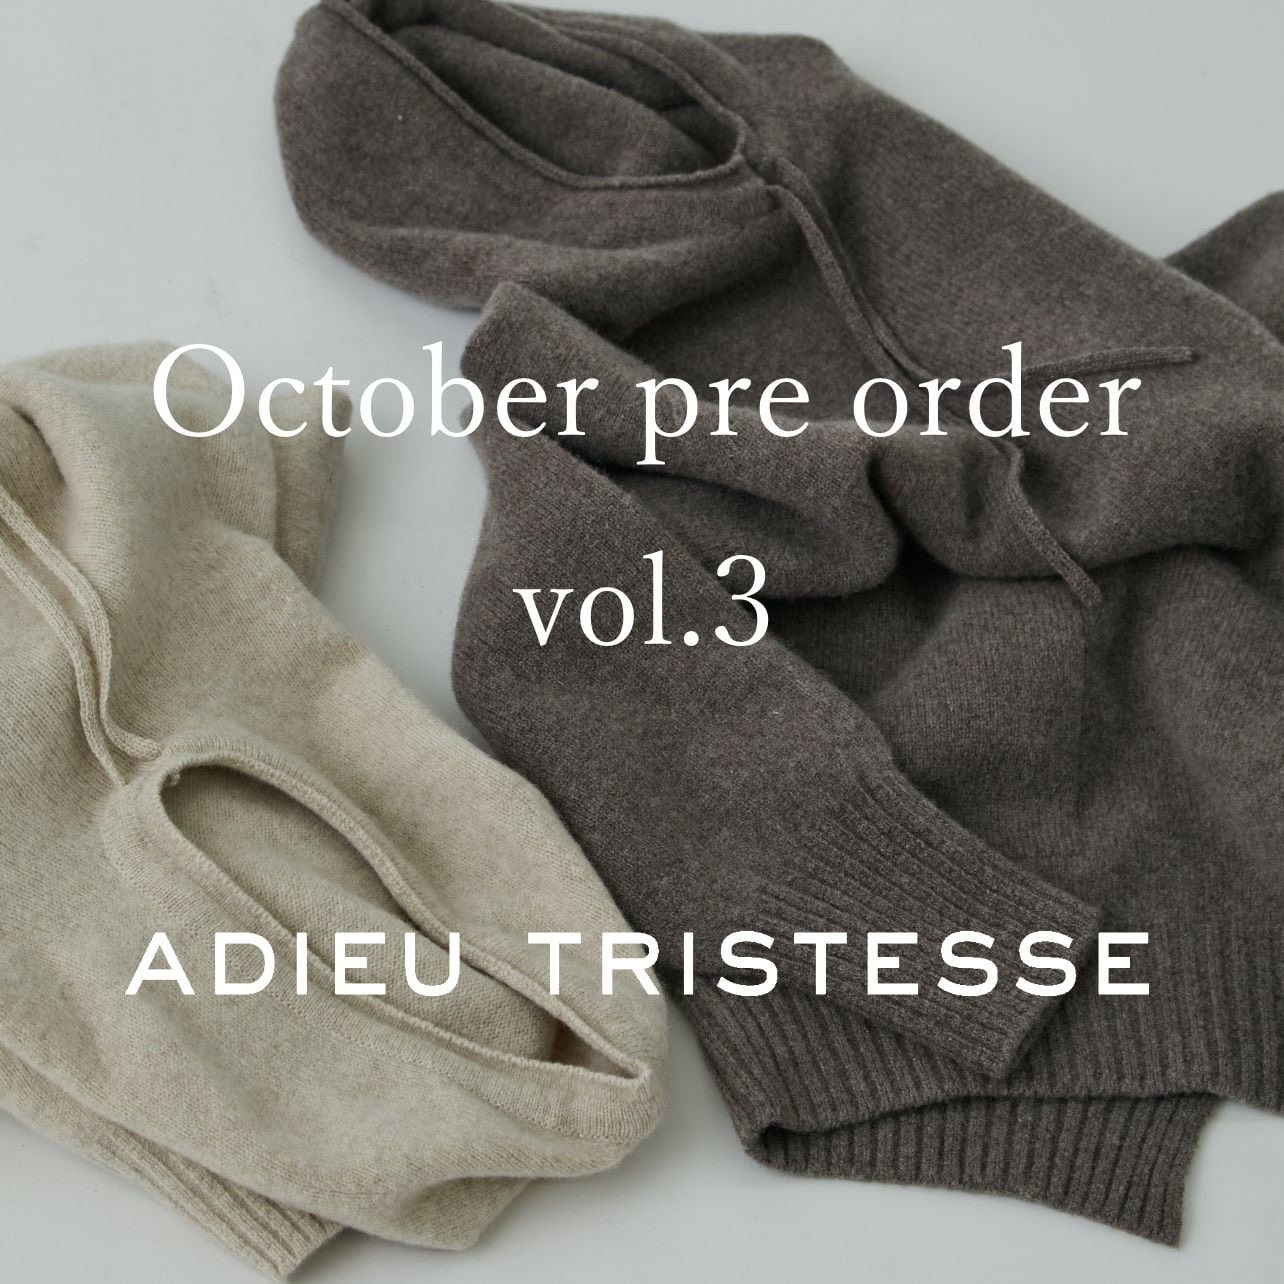 October pre order vol.3